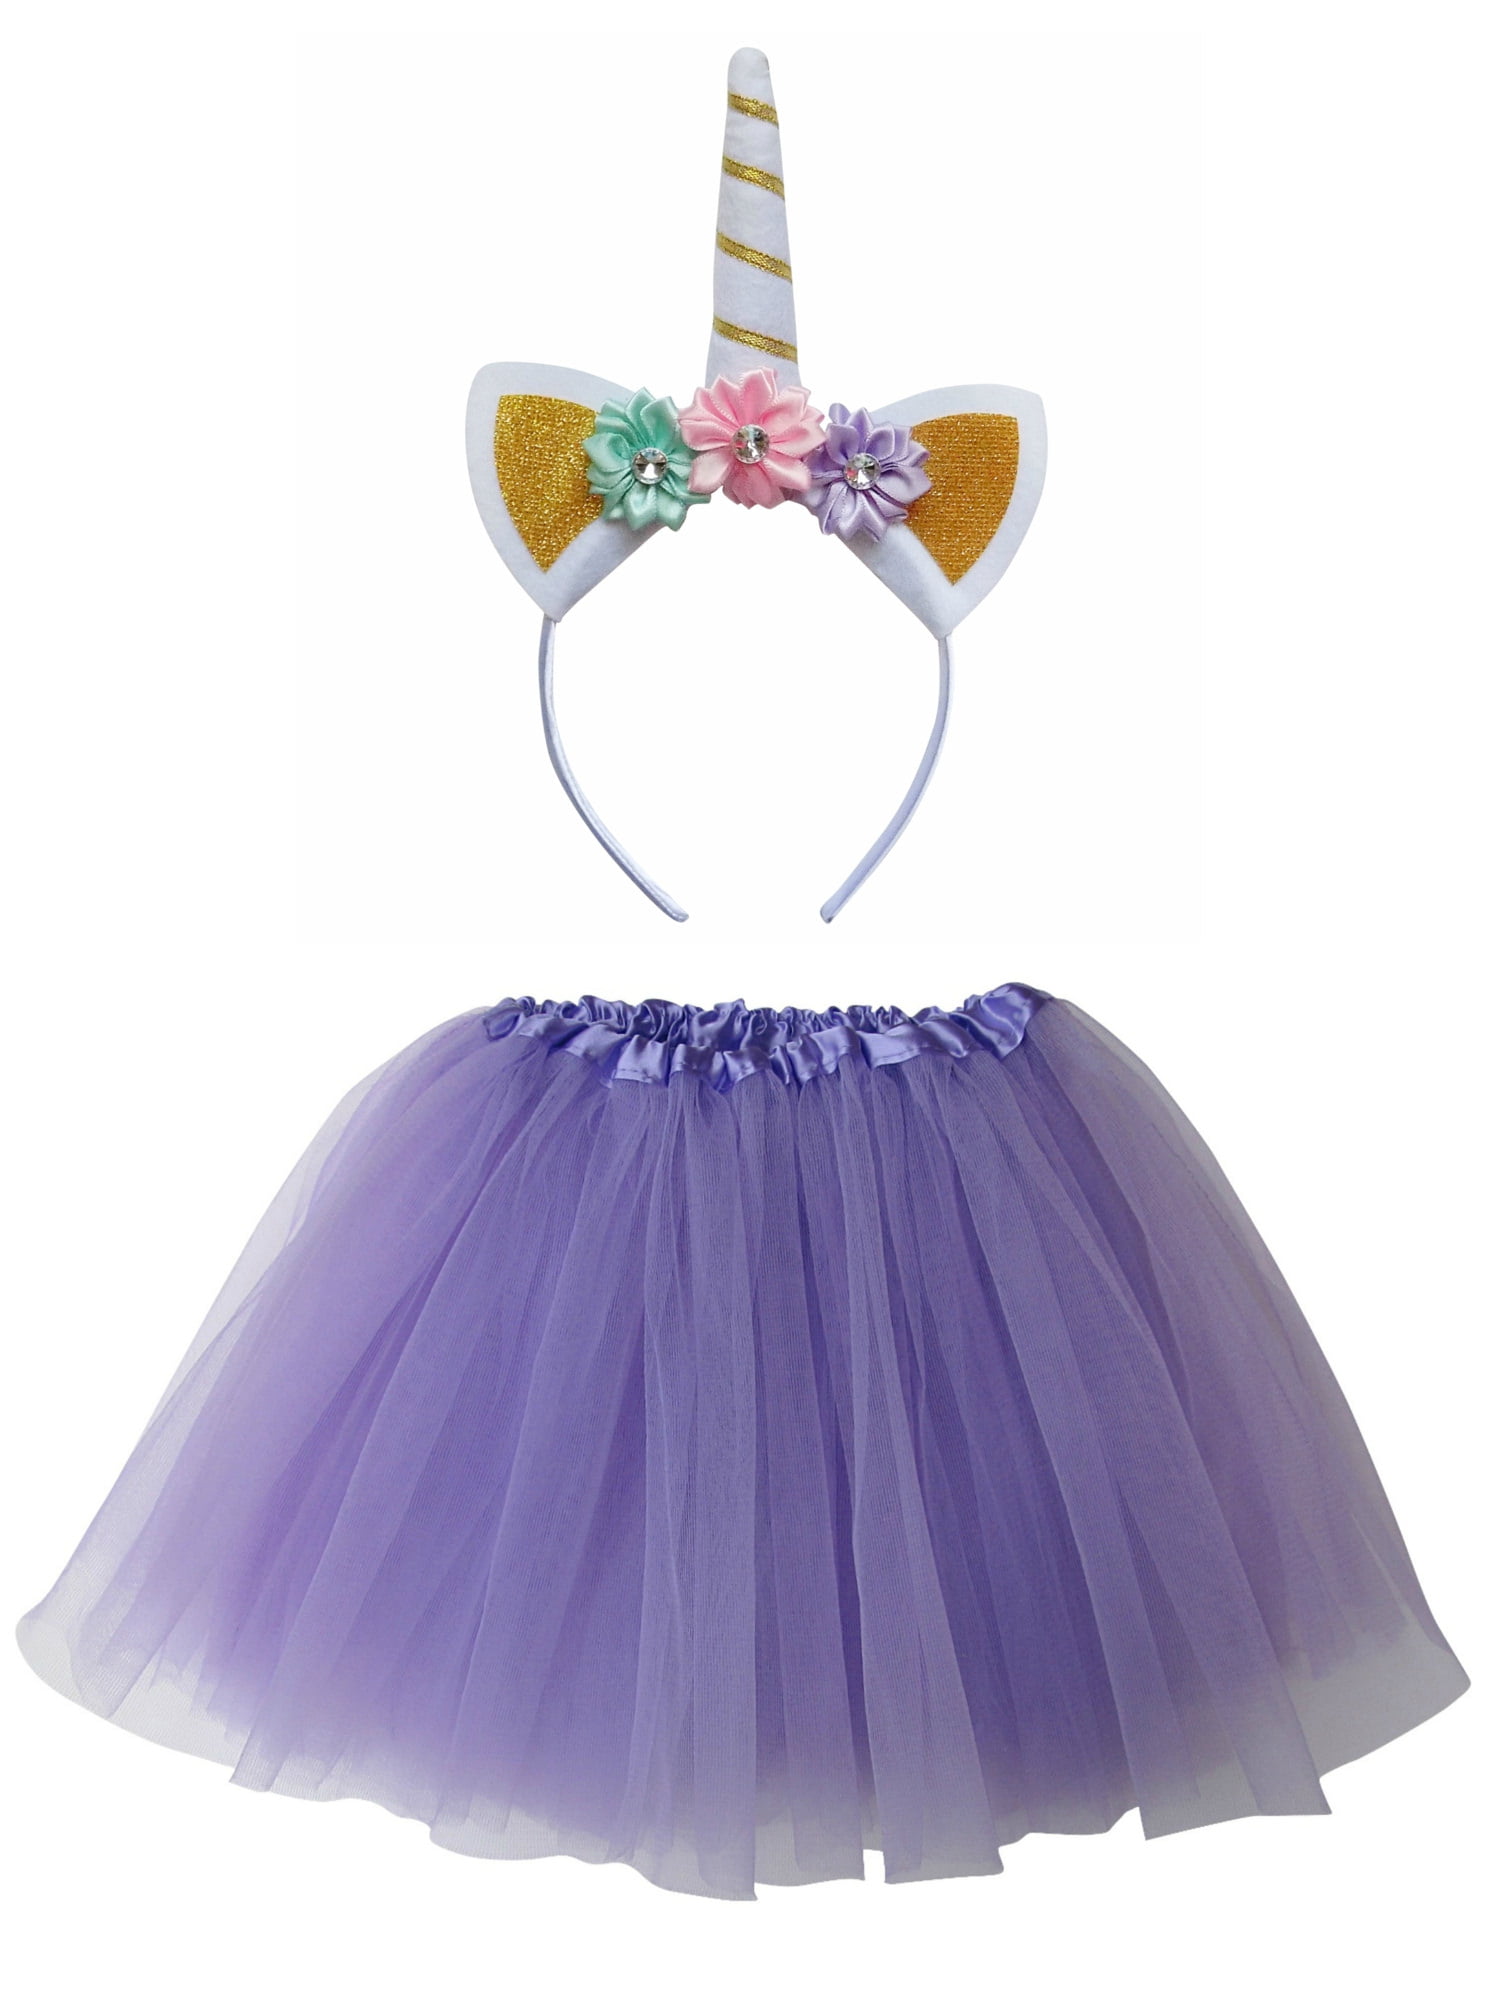 Rainbow Baby Tutu Skirt Knickers Girls Niece Headband Unicorn Outfit Party Gift 